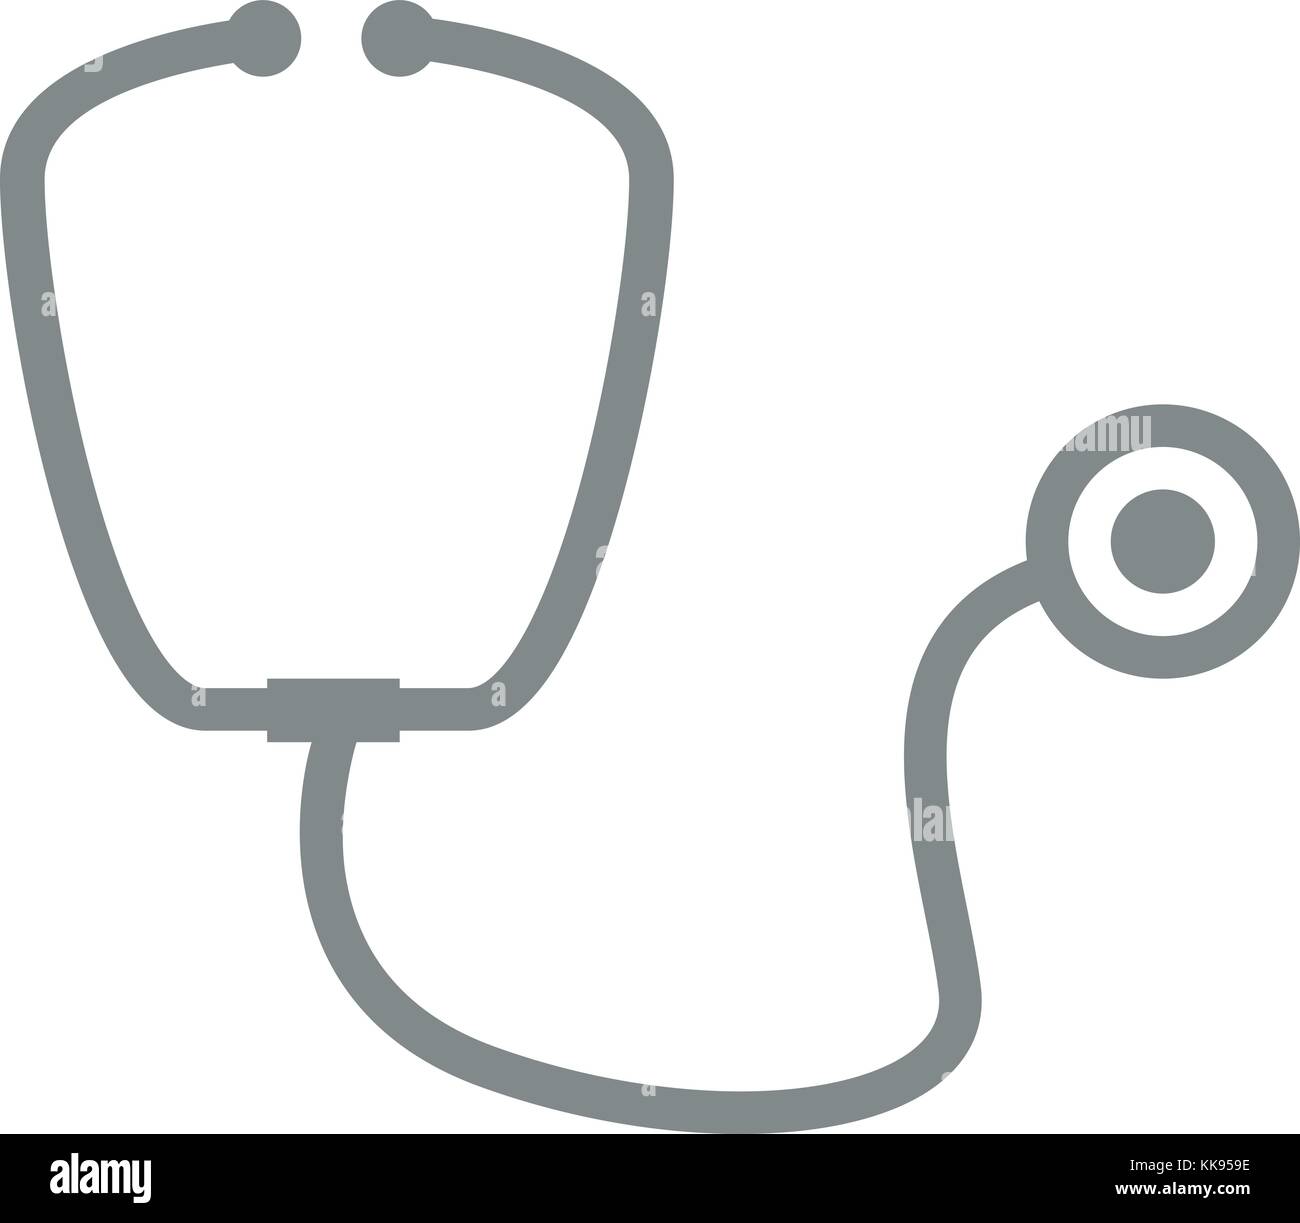 Simple Stethoscope Symbol Monochrome Vector Graphic Illustration Design  Stock Vector Image & Art - Alamy